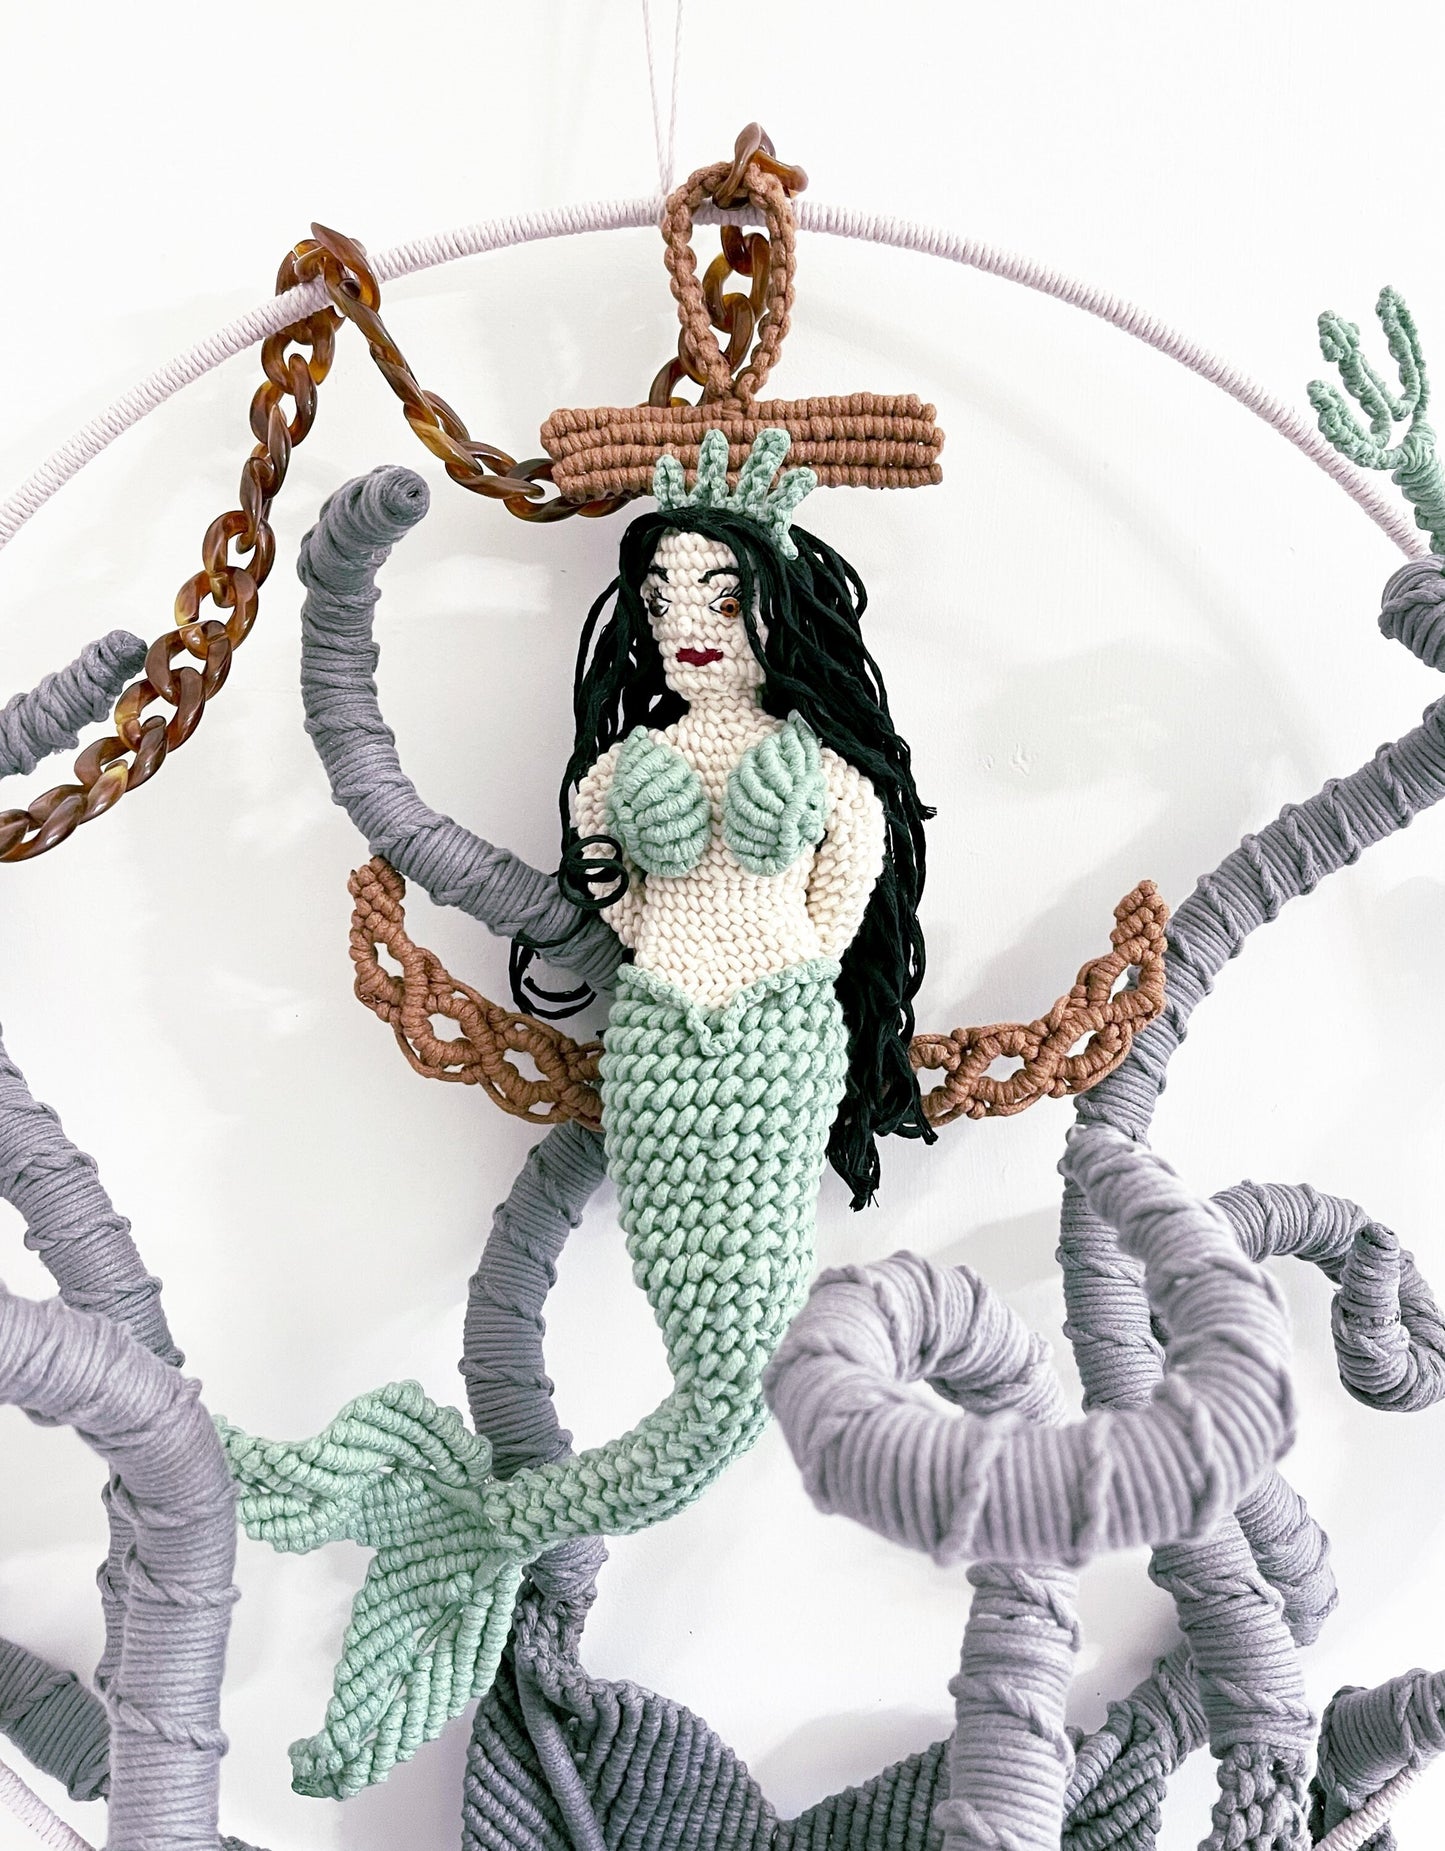 COMMISSION ONLY ART// Custom order/Mermaid with Kraken/Mermaid Art/Macrame Sculpture/ Kraken/Mermaid/Macrame Sculpture